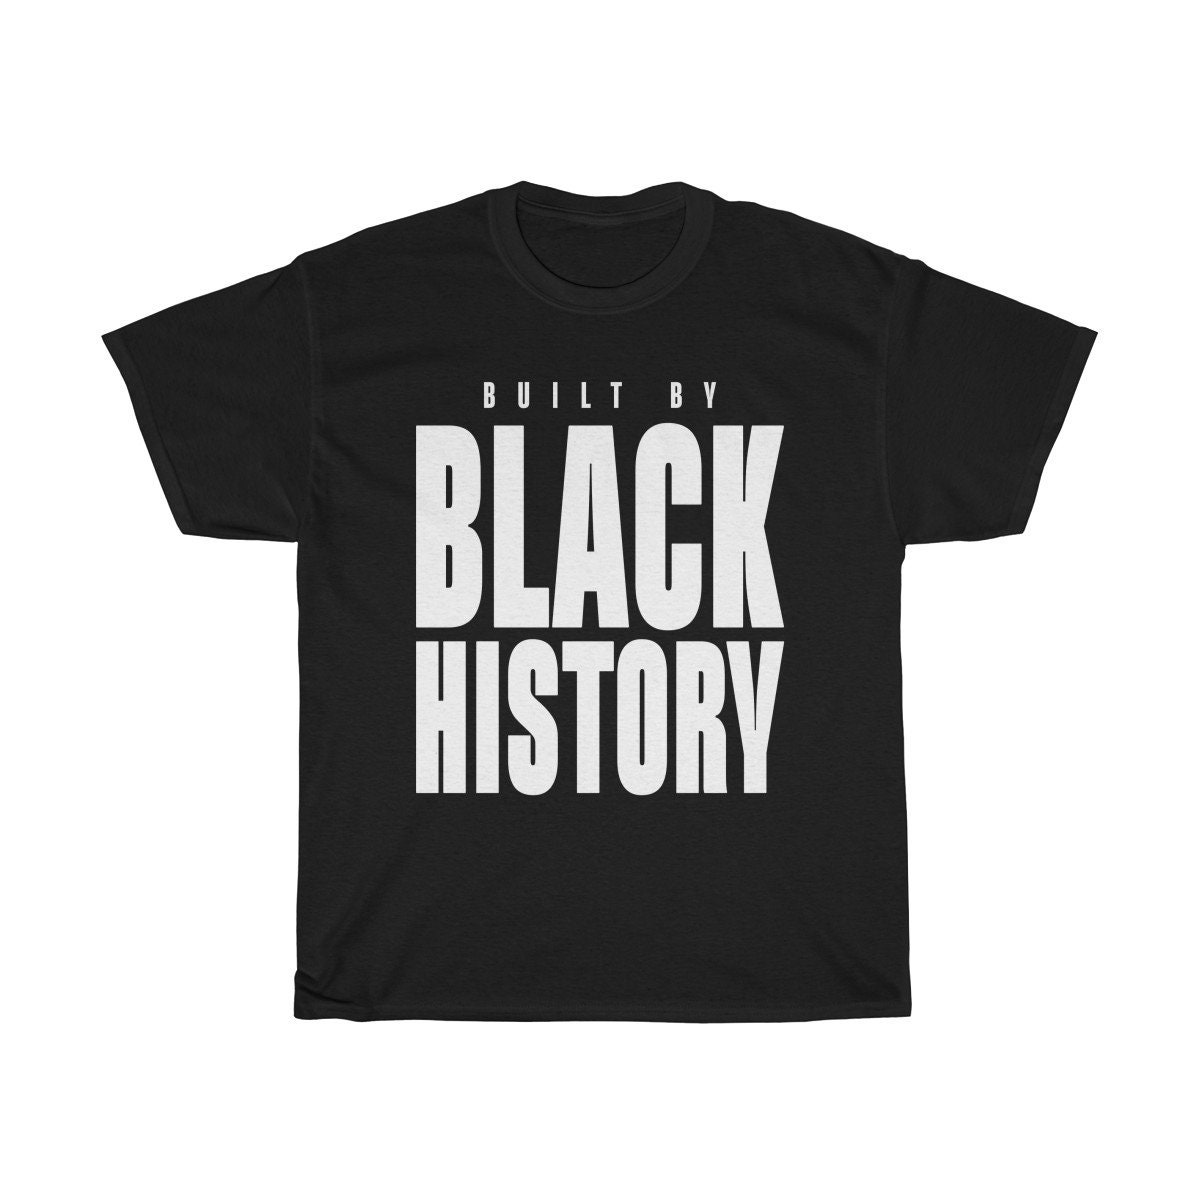 NBA Nike MLK I Have A Dream Performance T-Shirt - Black